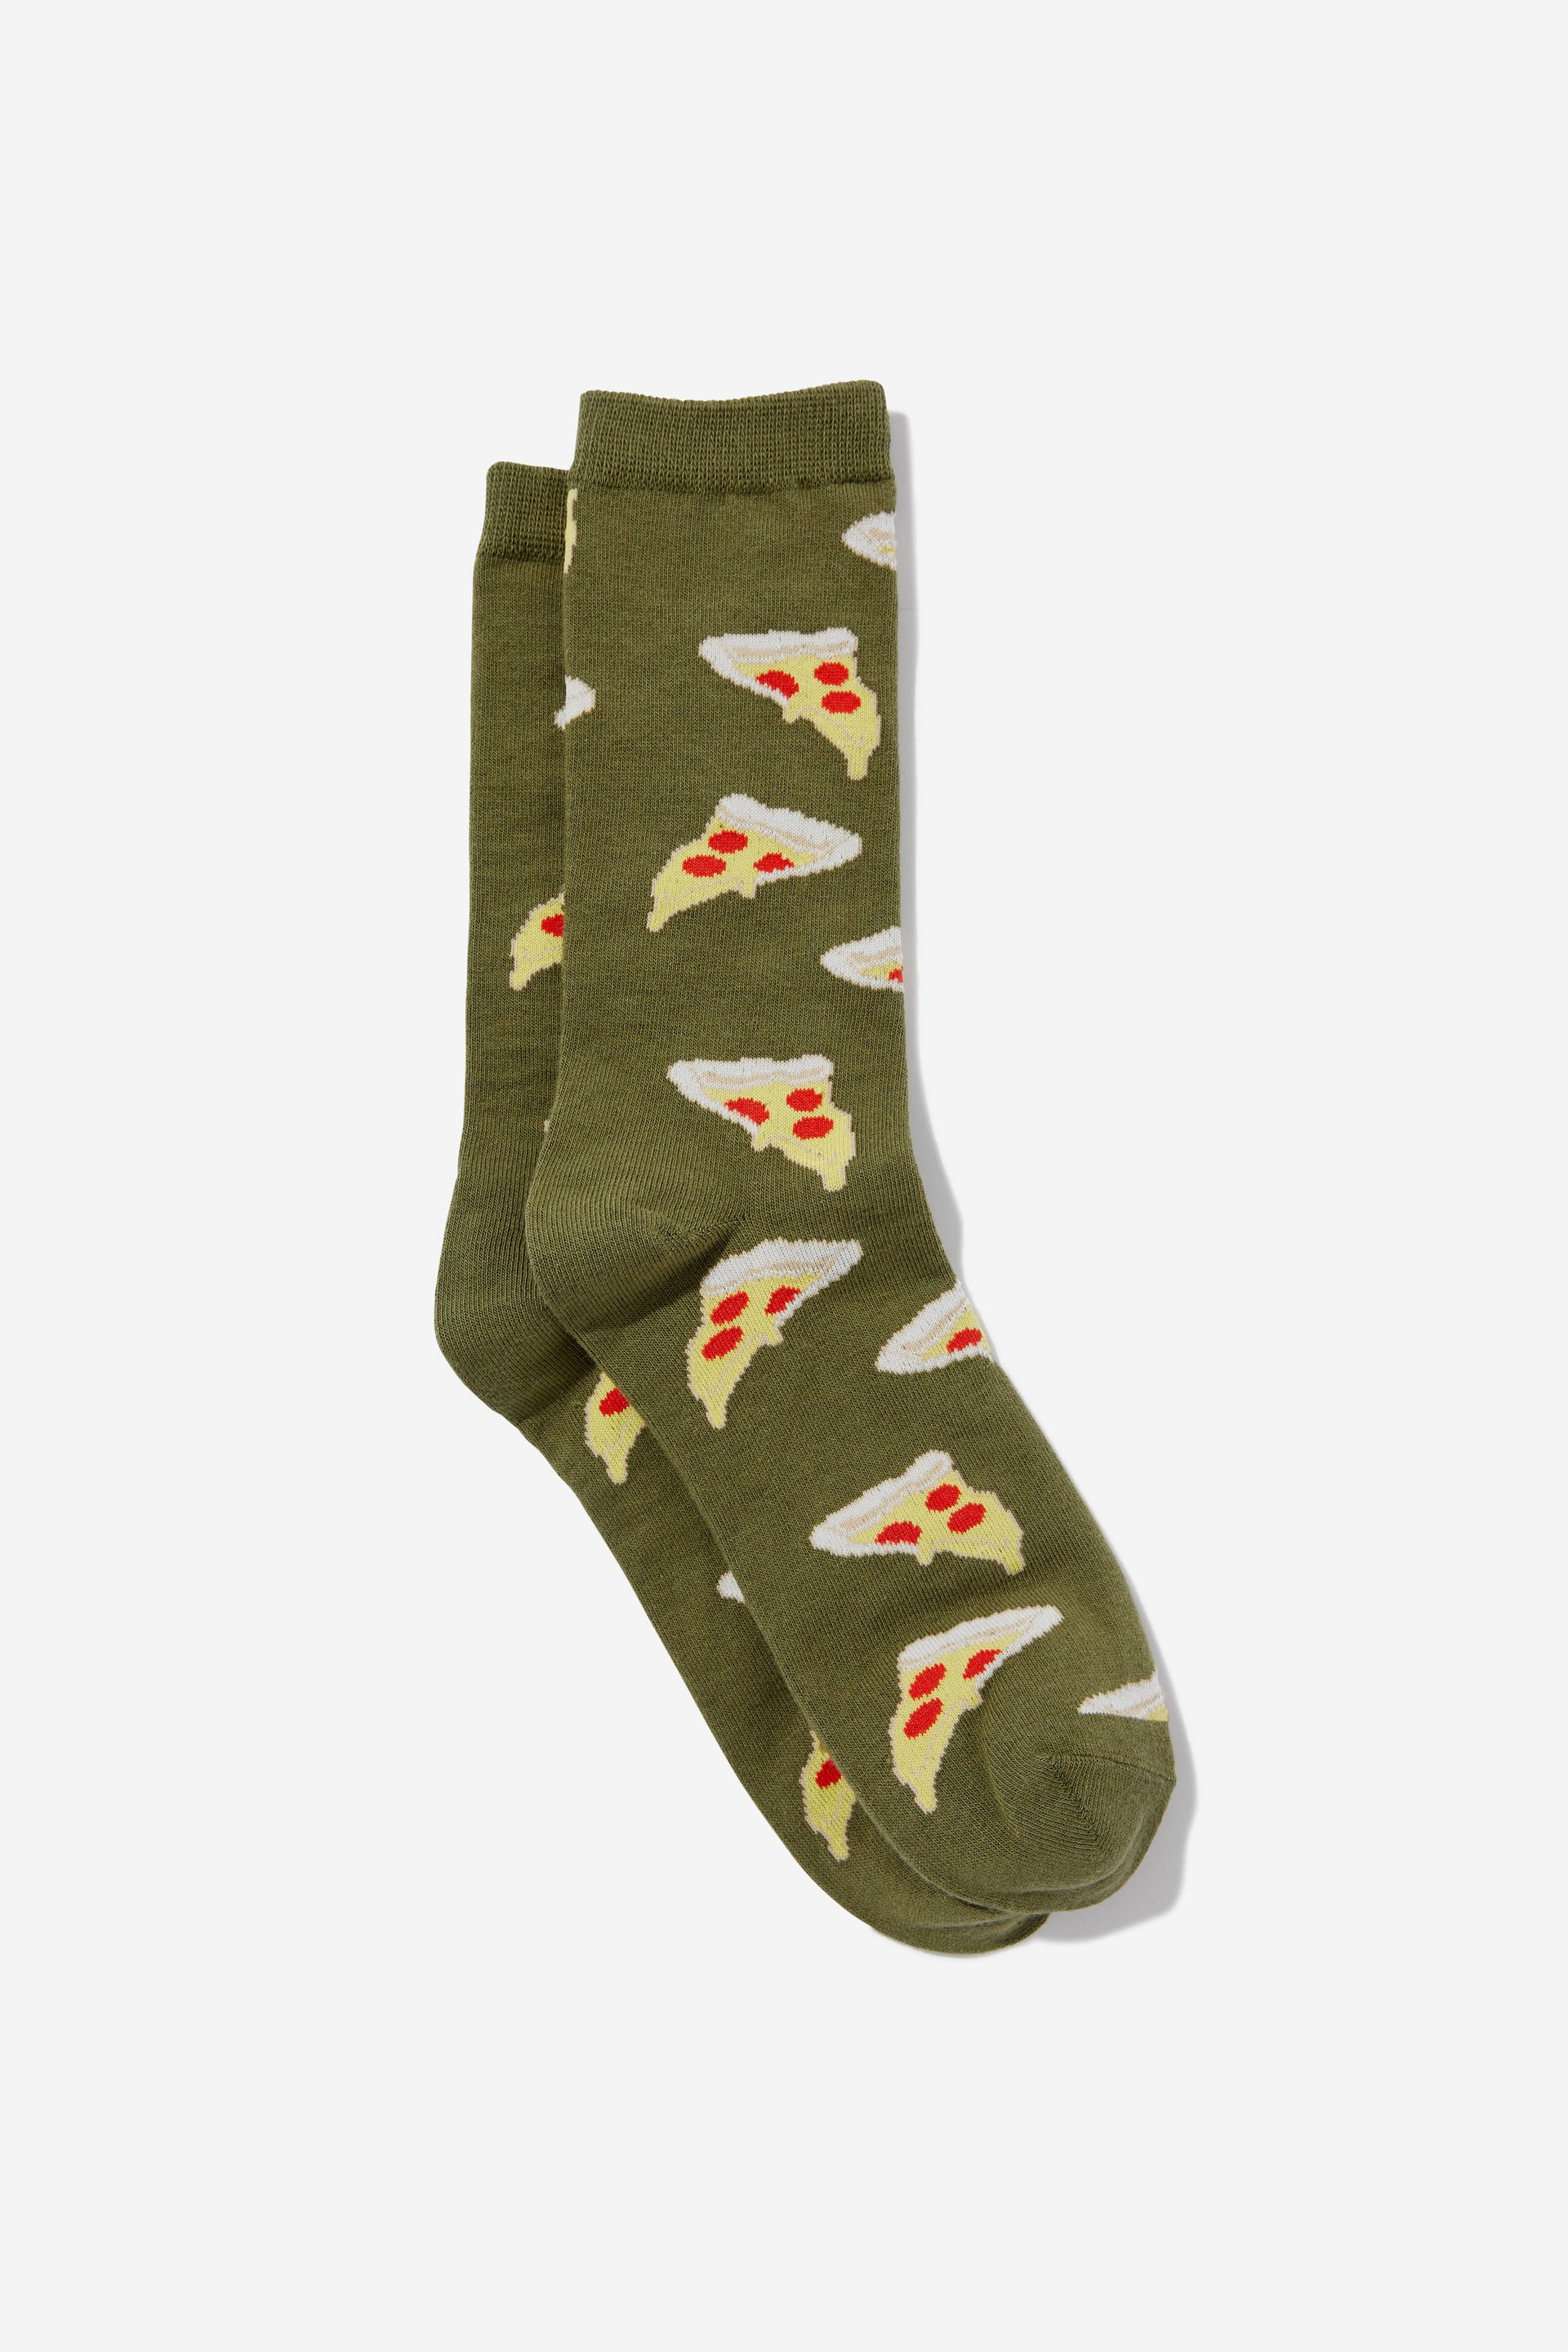 Typo - Socks - Pizza please vt